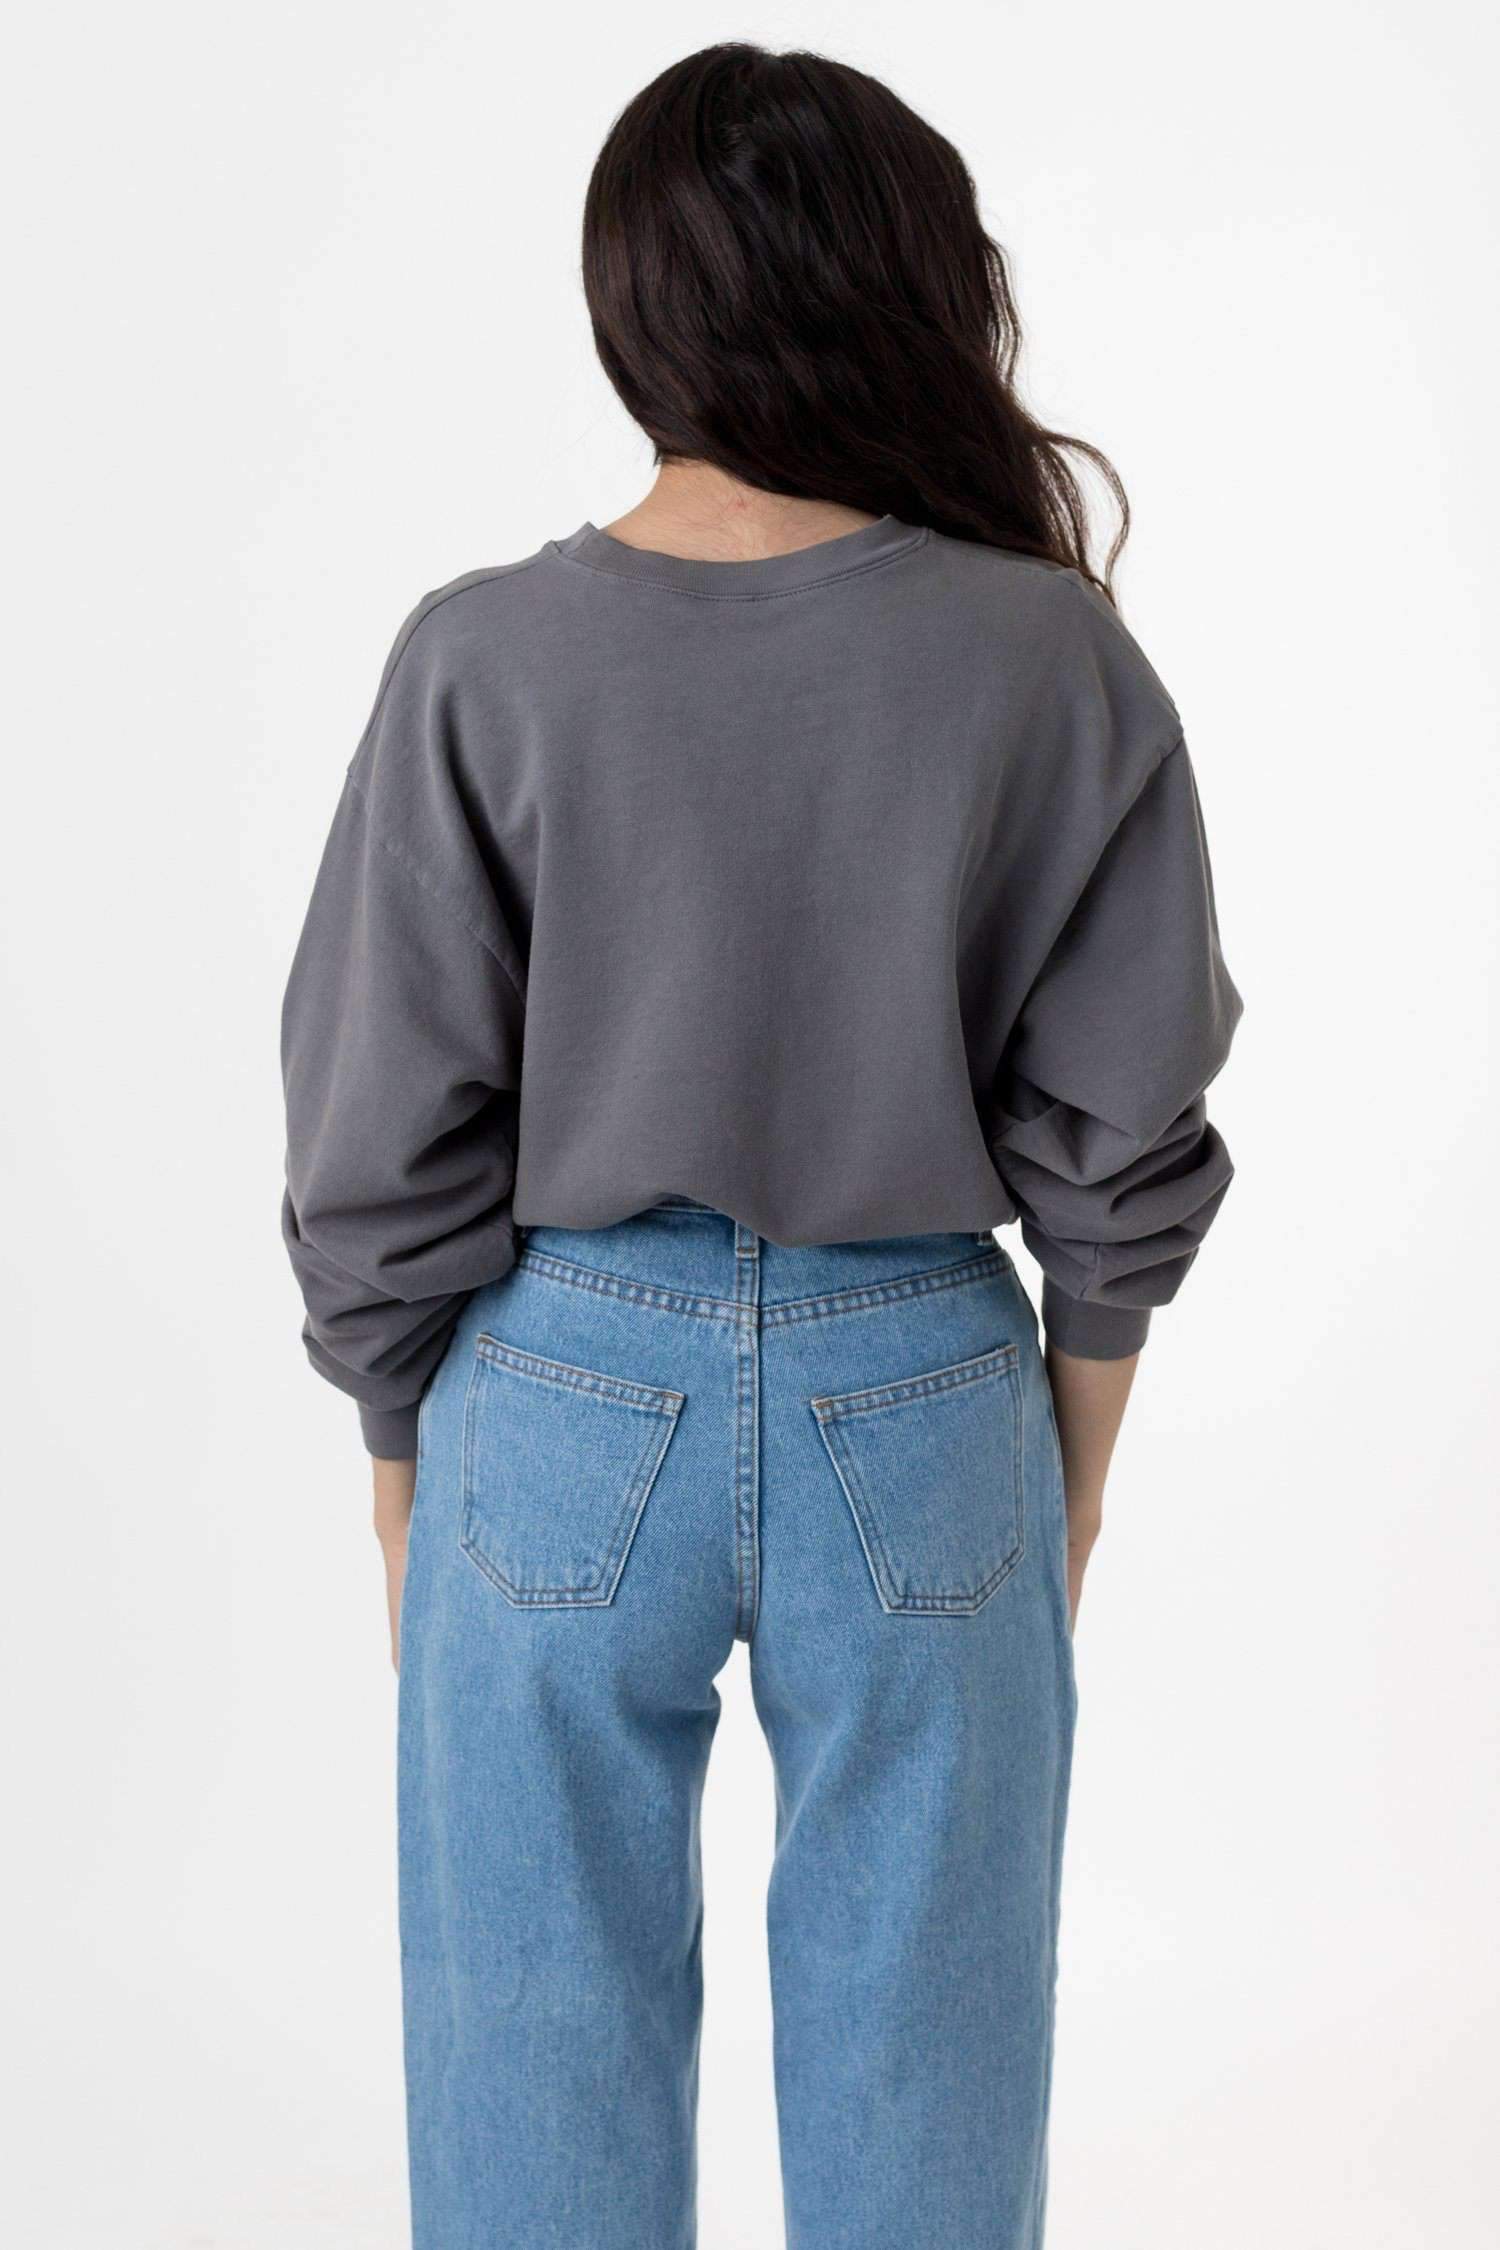 MWT07GD Unisex - Long Sleeve Garment Dye French Terry Pullover Sweatshirt Los Angeles Apparel 